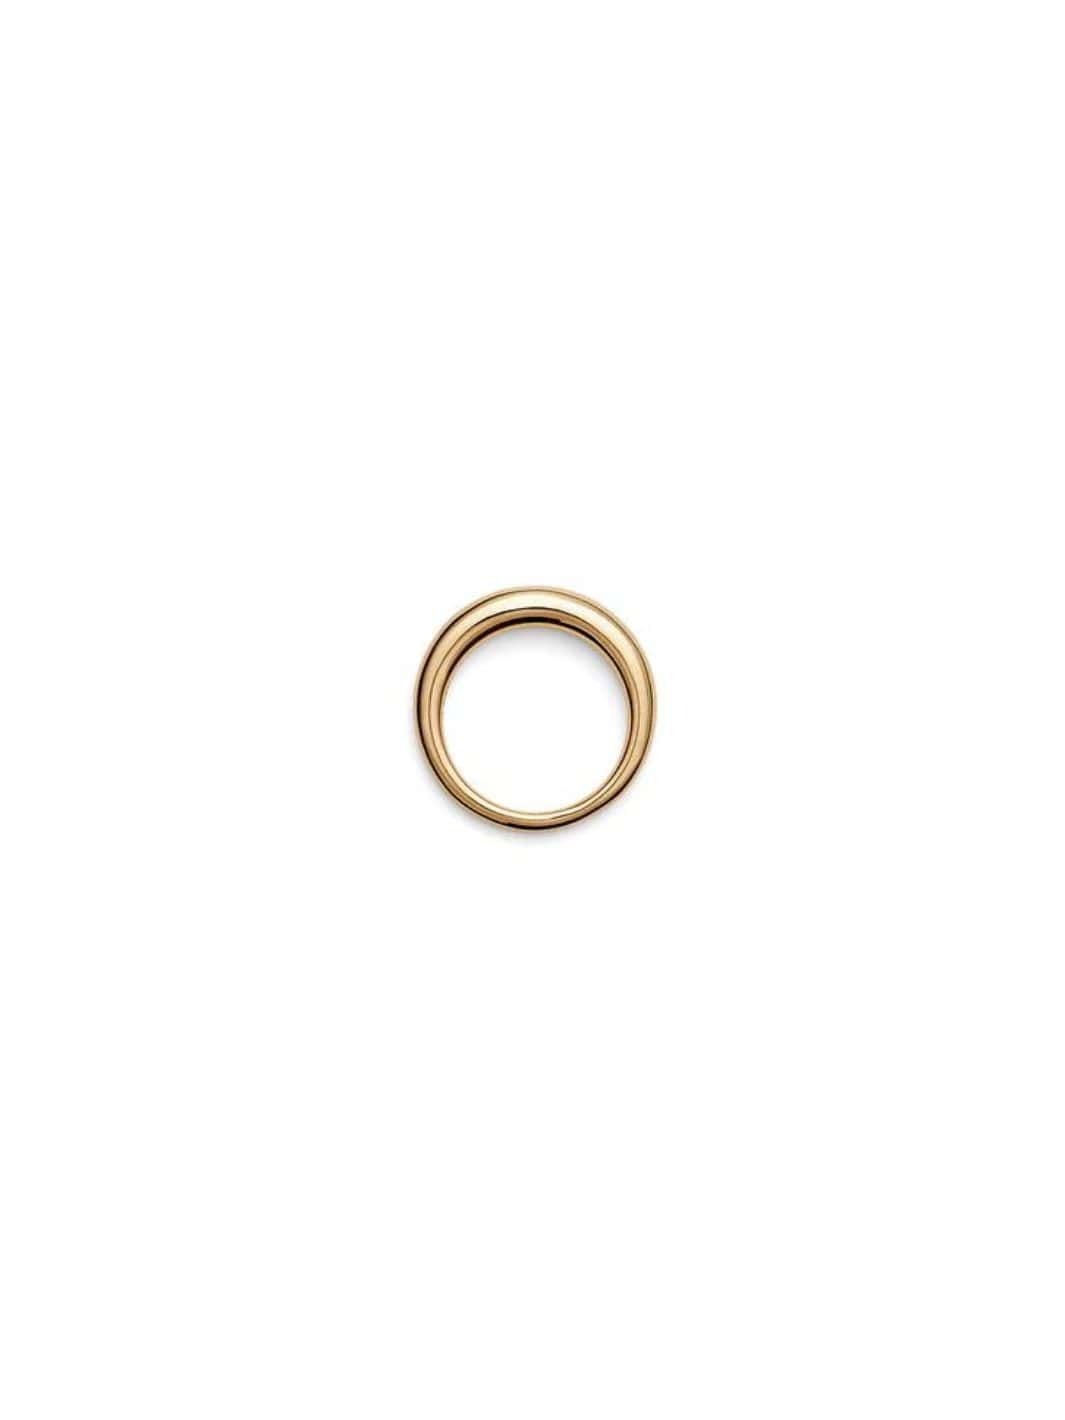 Lié Studio Accessories Ring | The Nanna Ring Gold